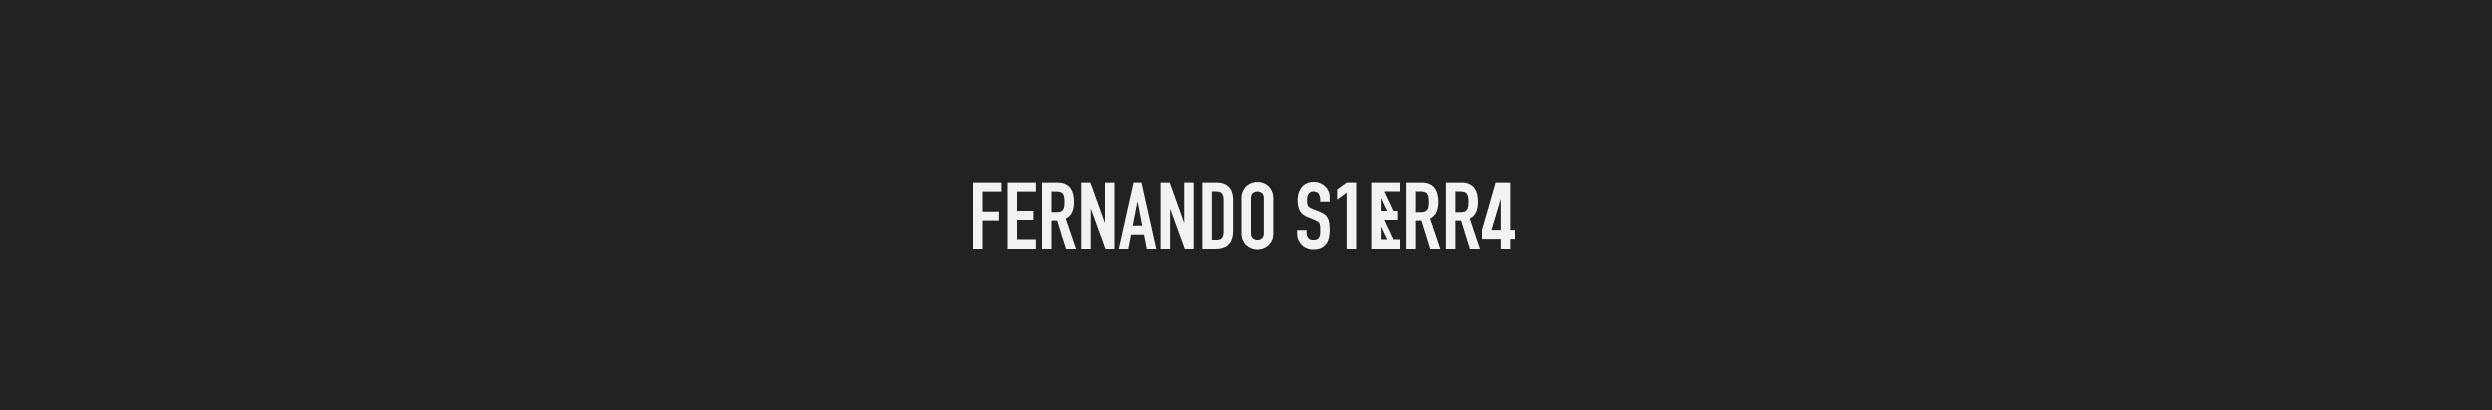 Fernando Sierra's profile banner